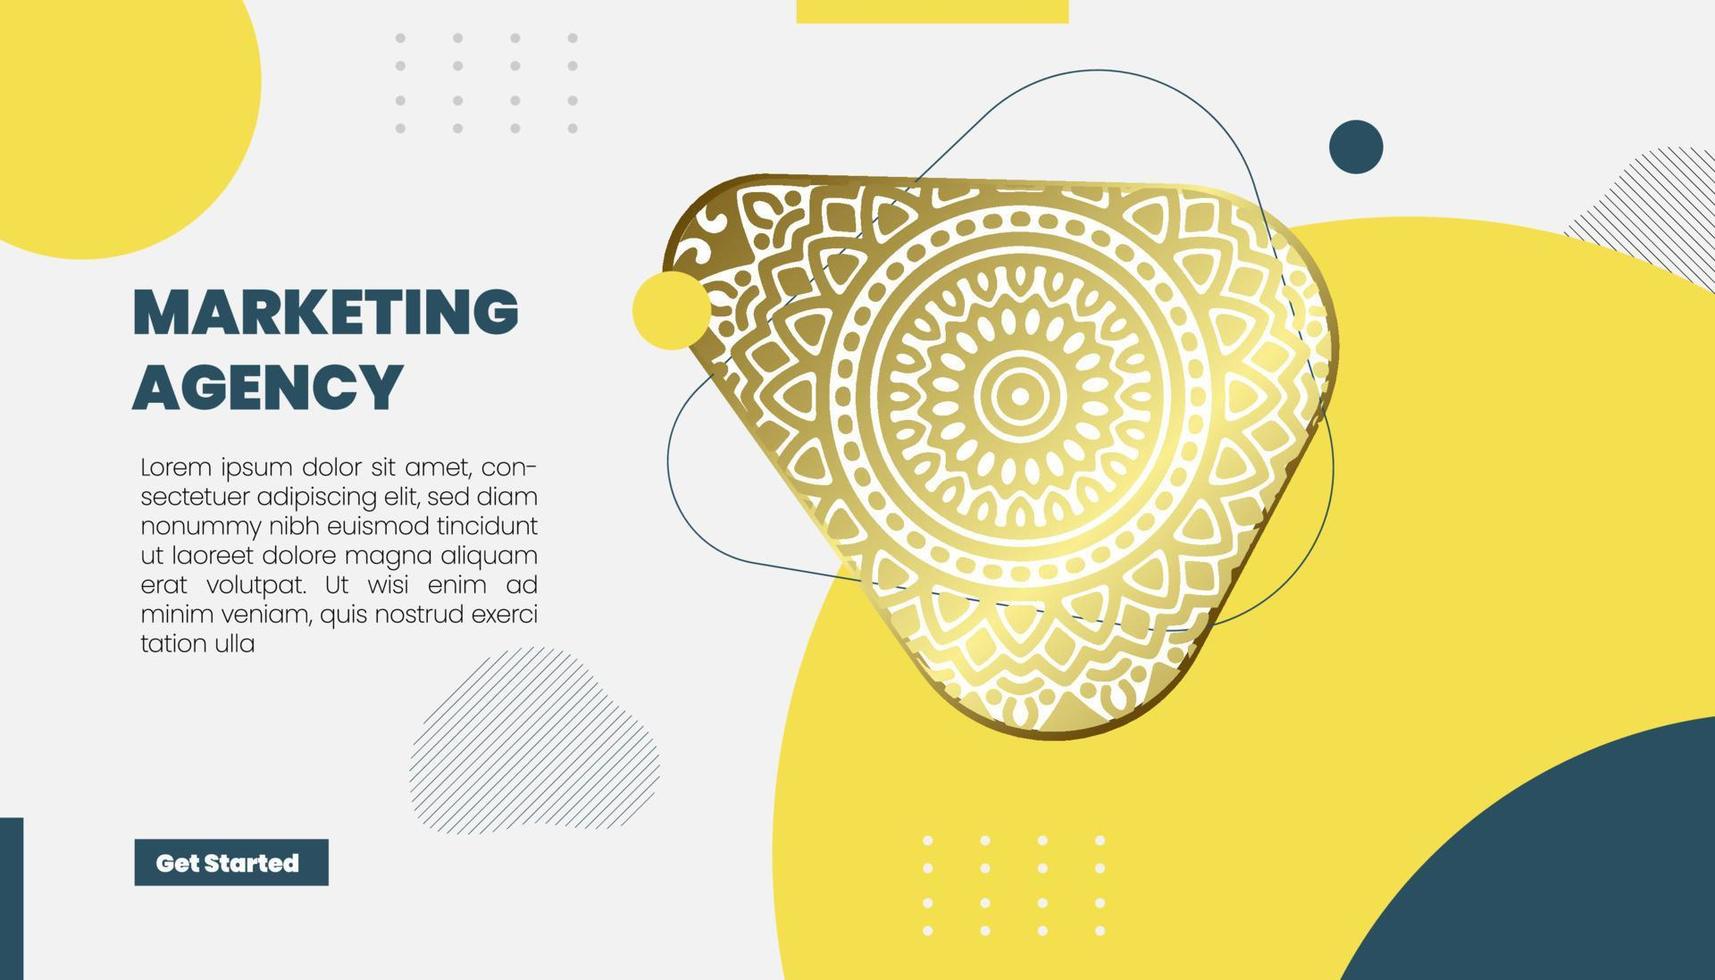 Mandala ornate background for marketing agency vector